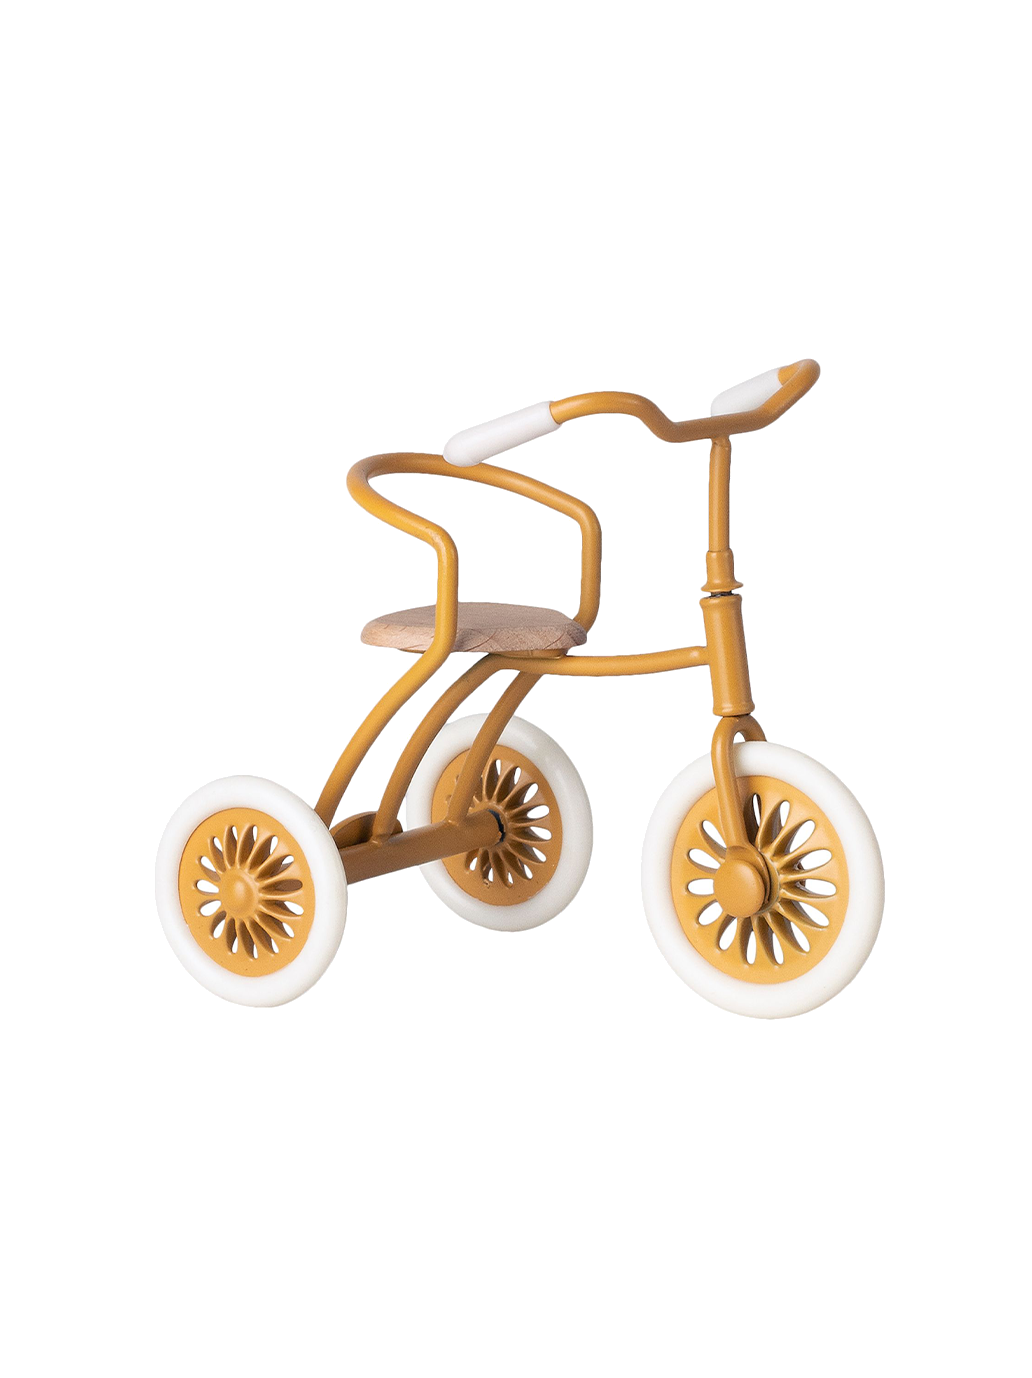 Miniature tricycle bike